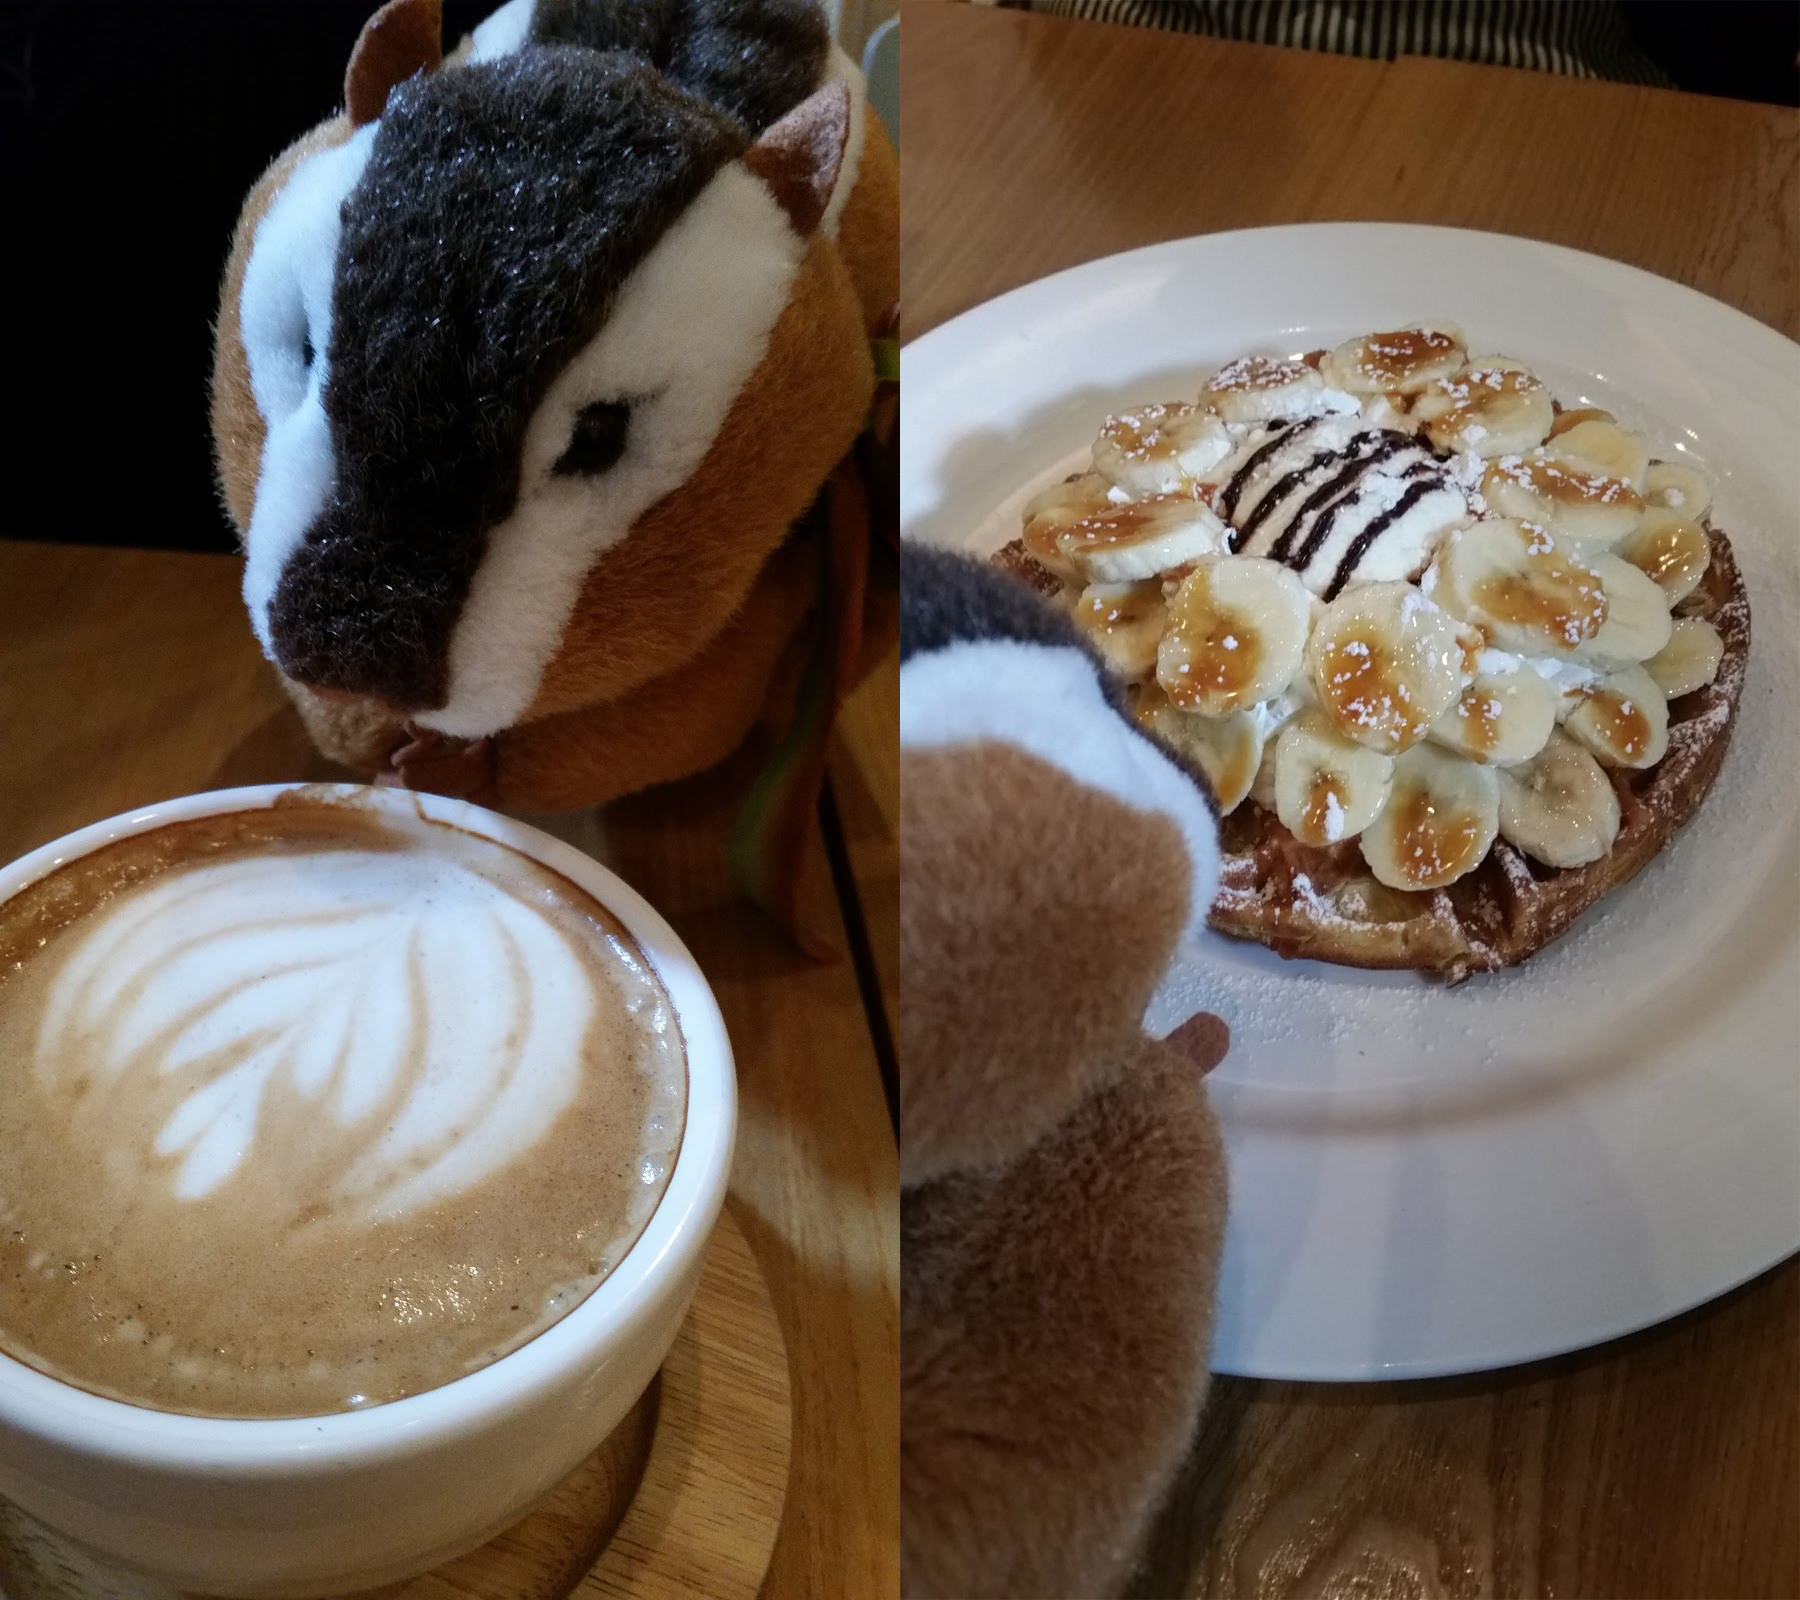 Hongdae - Thanks Nature Latte and Waffle